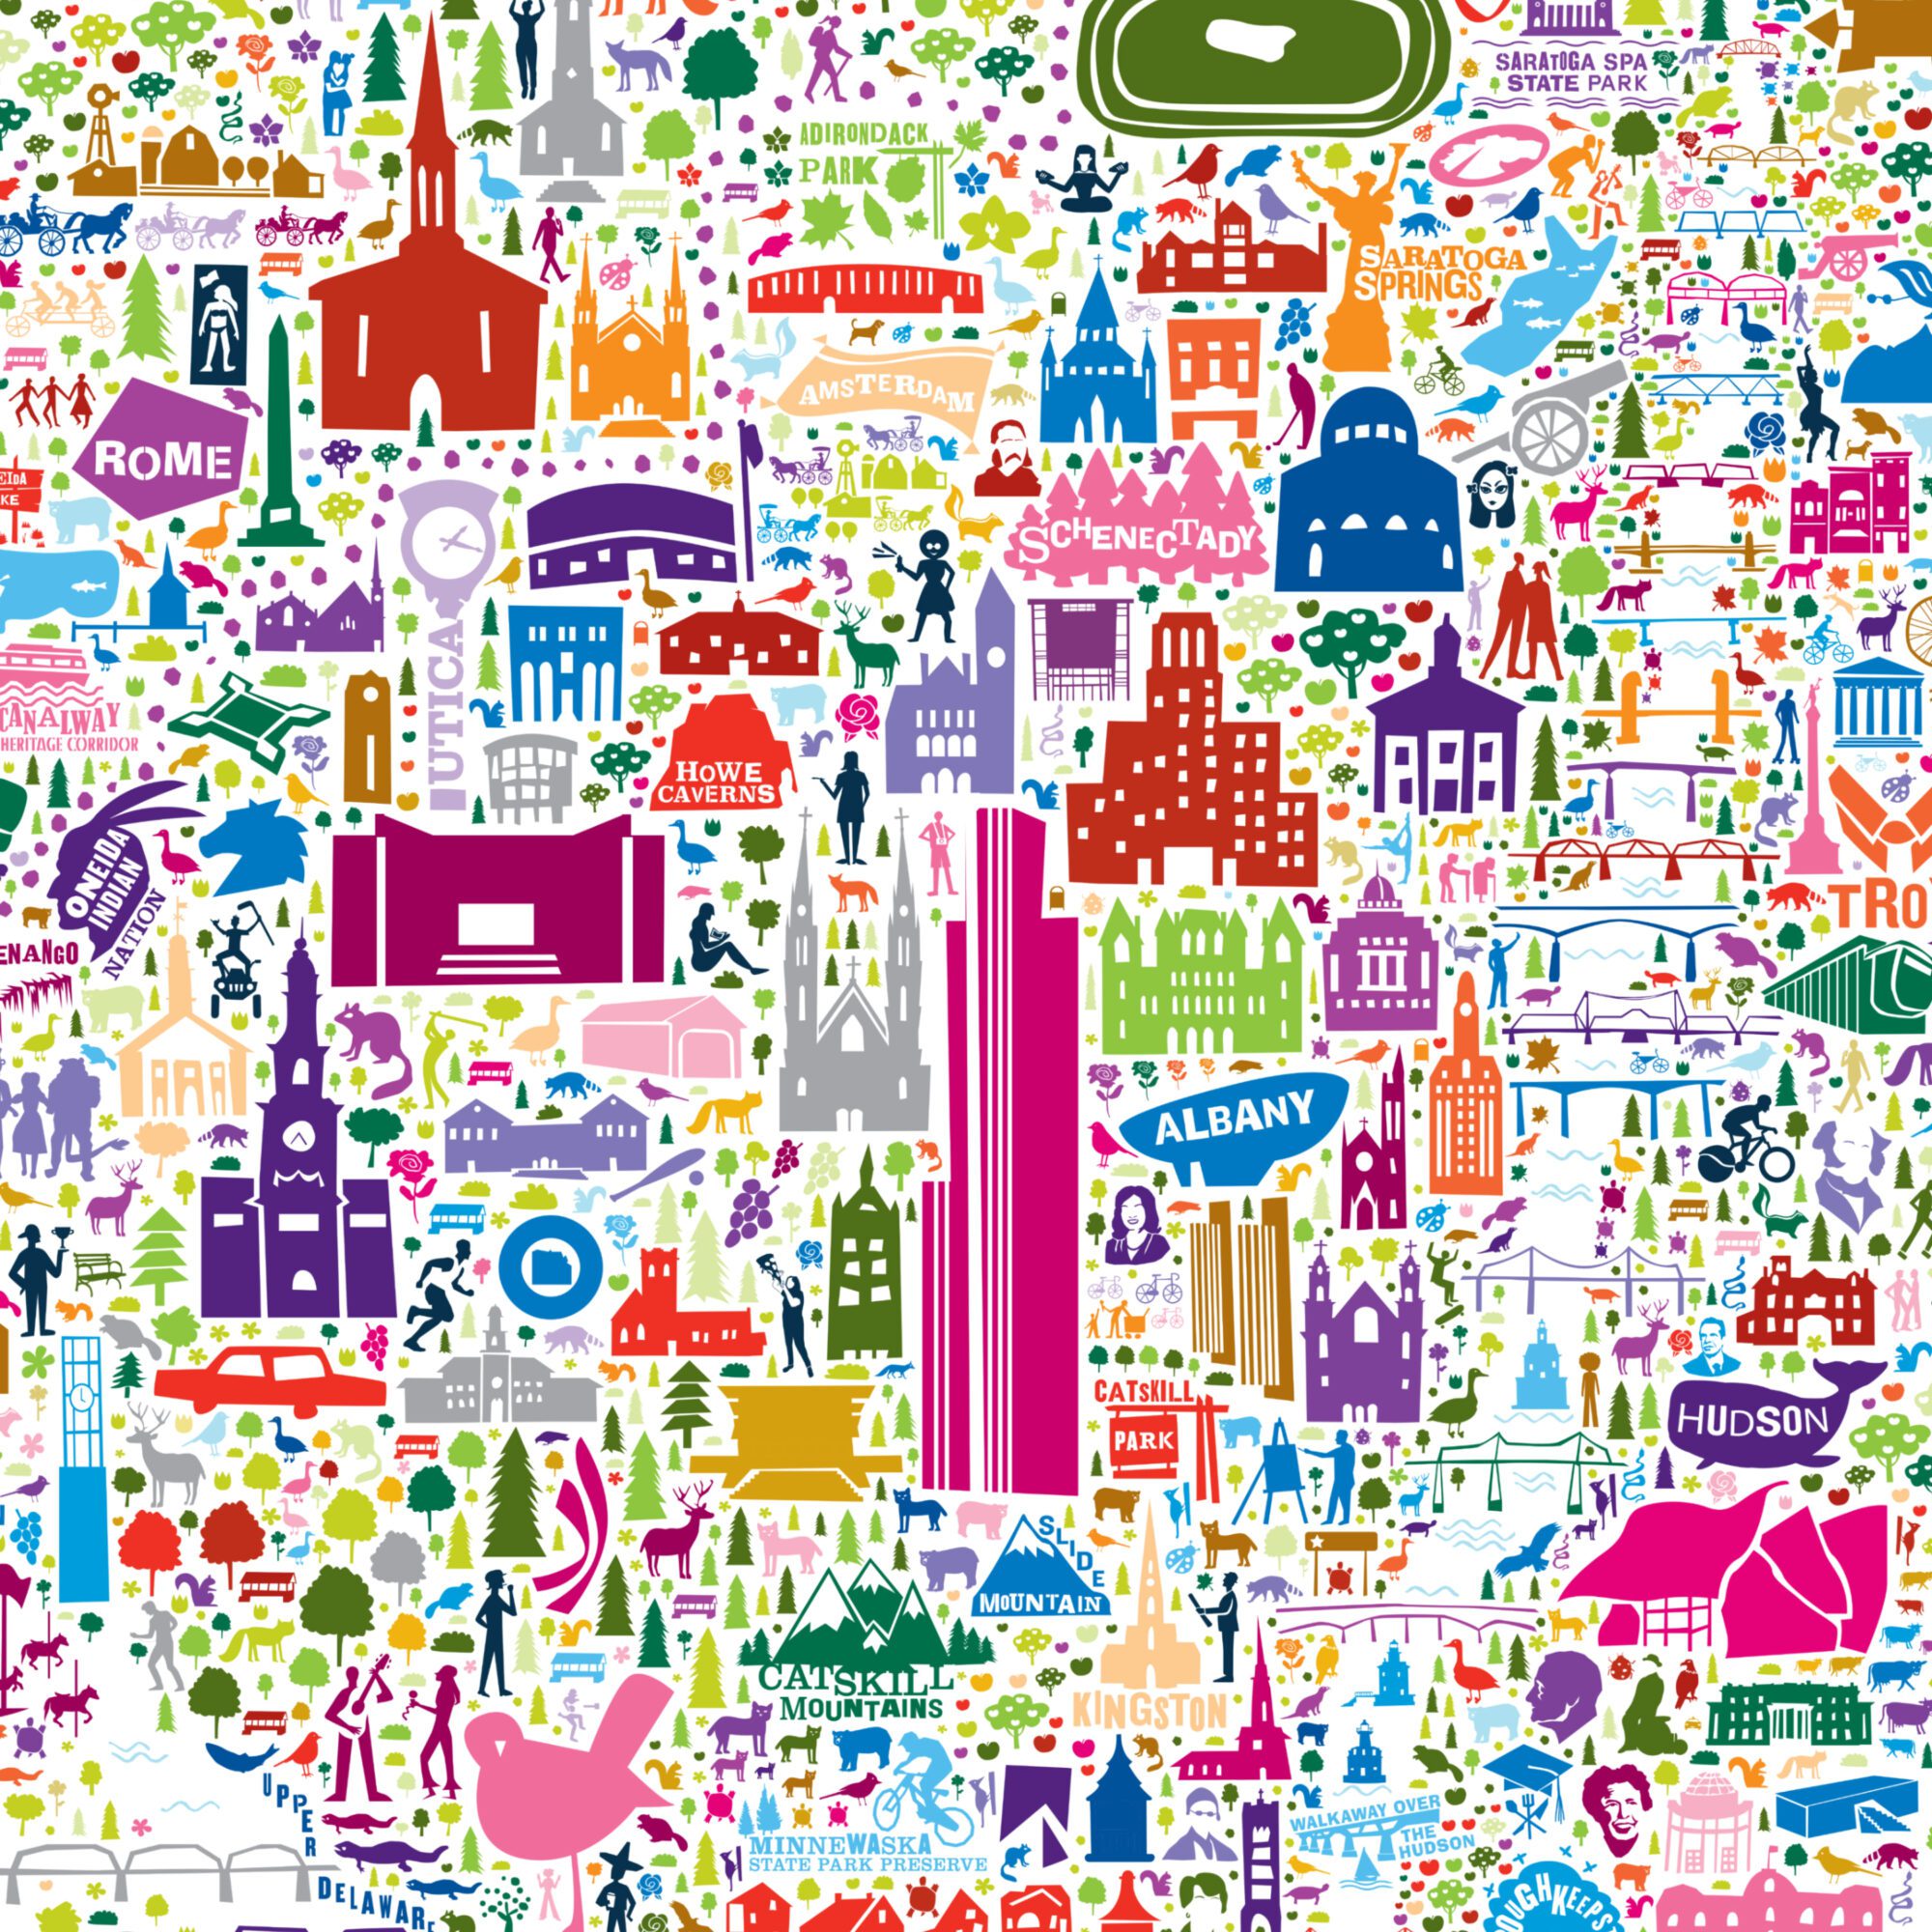 new york state print poster wall art decor modern colorful artwork decor for home office living room bedroom icons landmarks